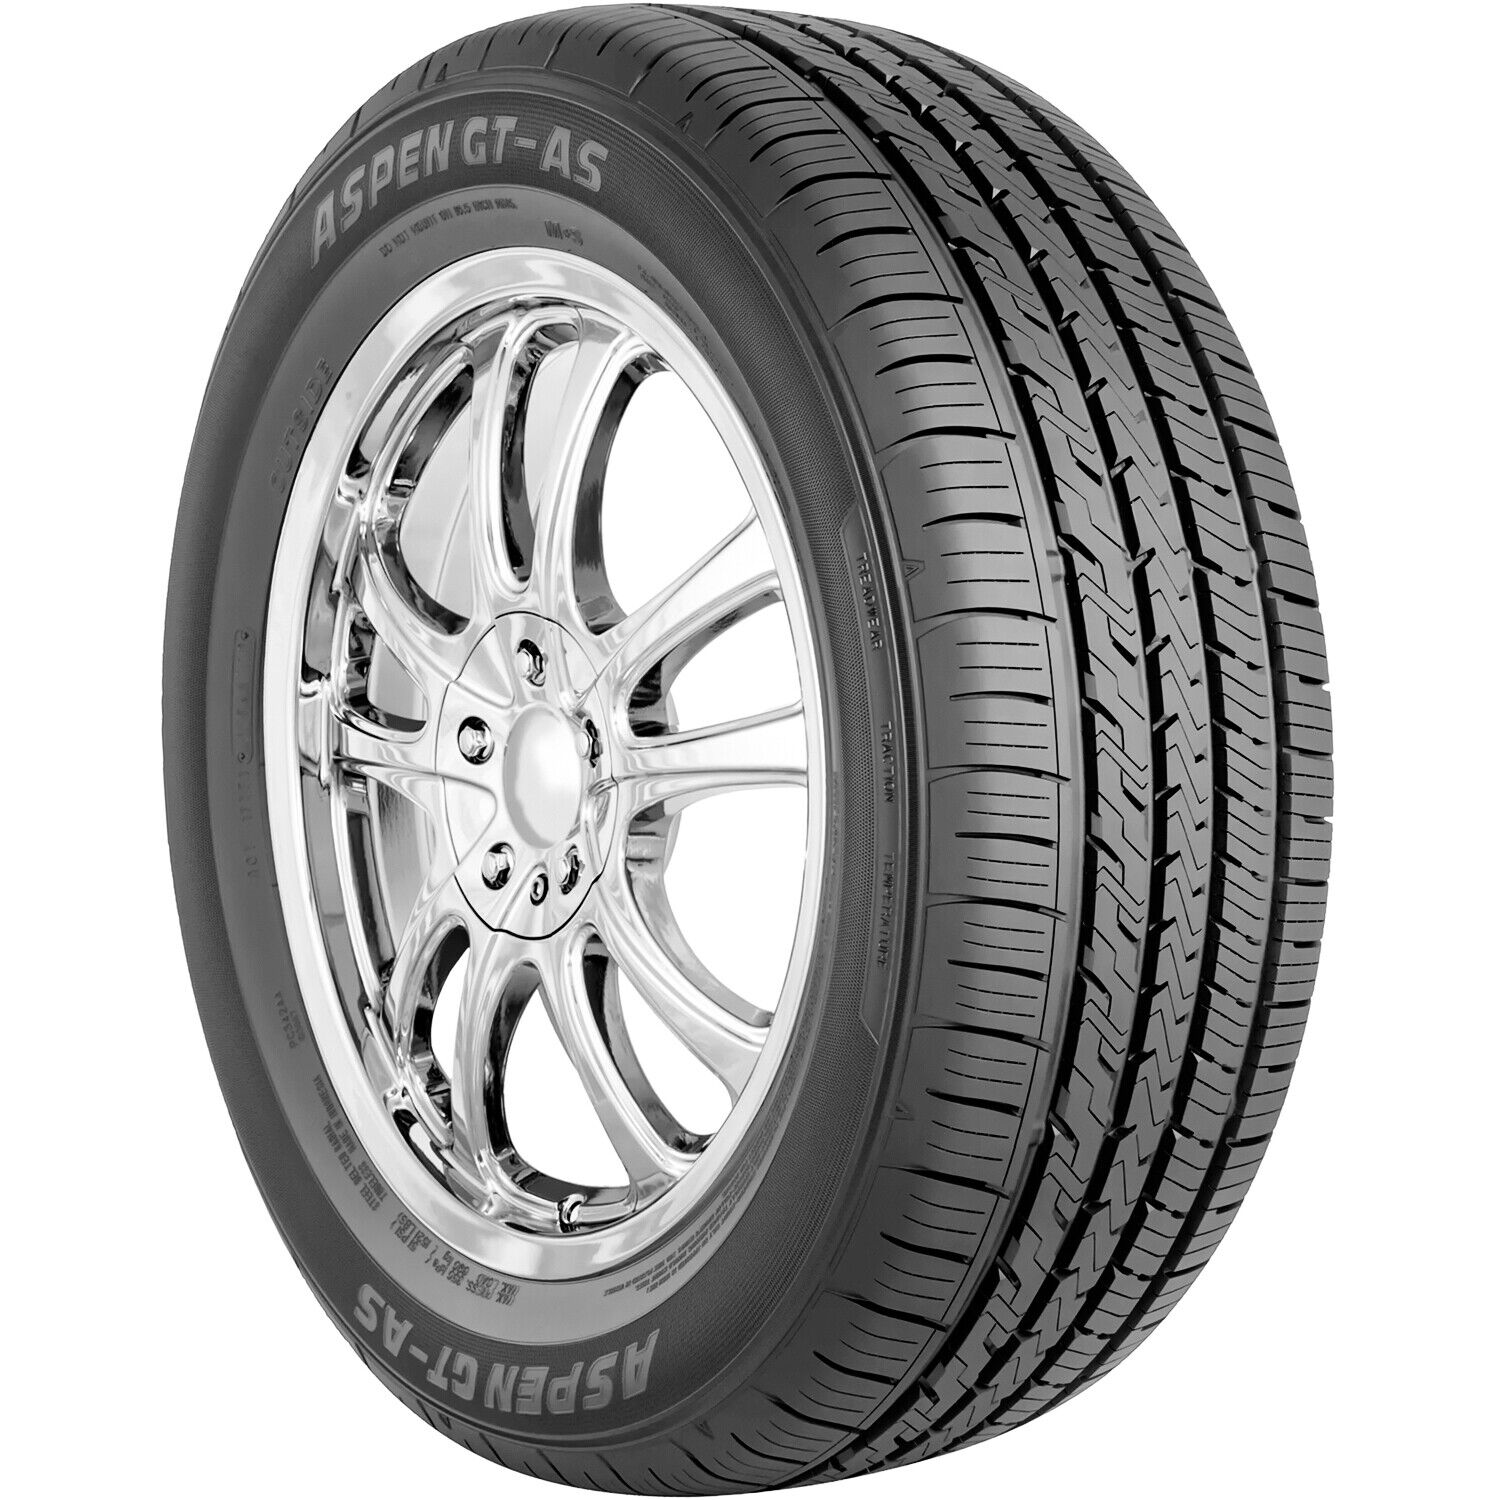 2 Tires Aspen GT-AS 185/60R15 84T AS A/S All Season